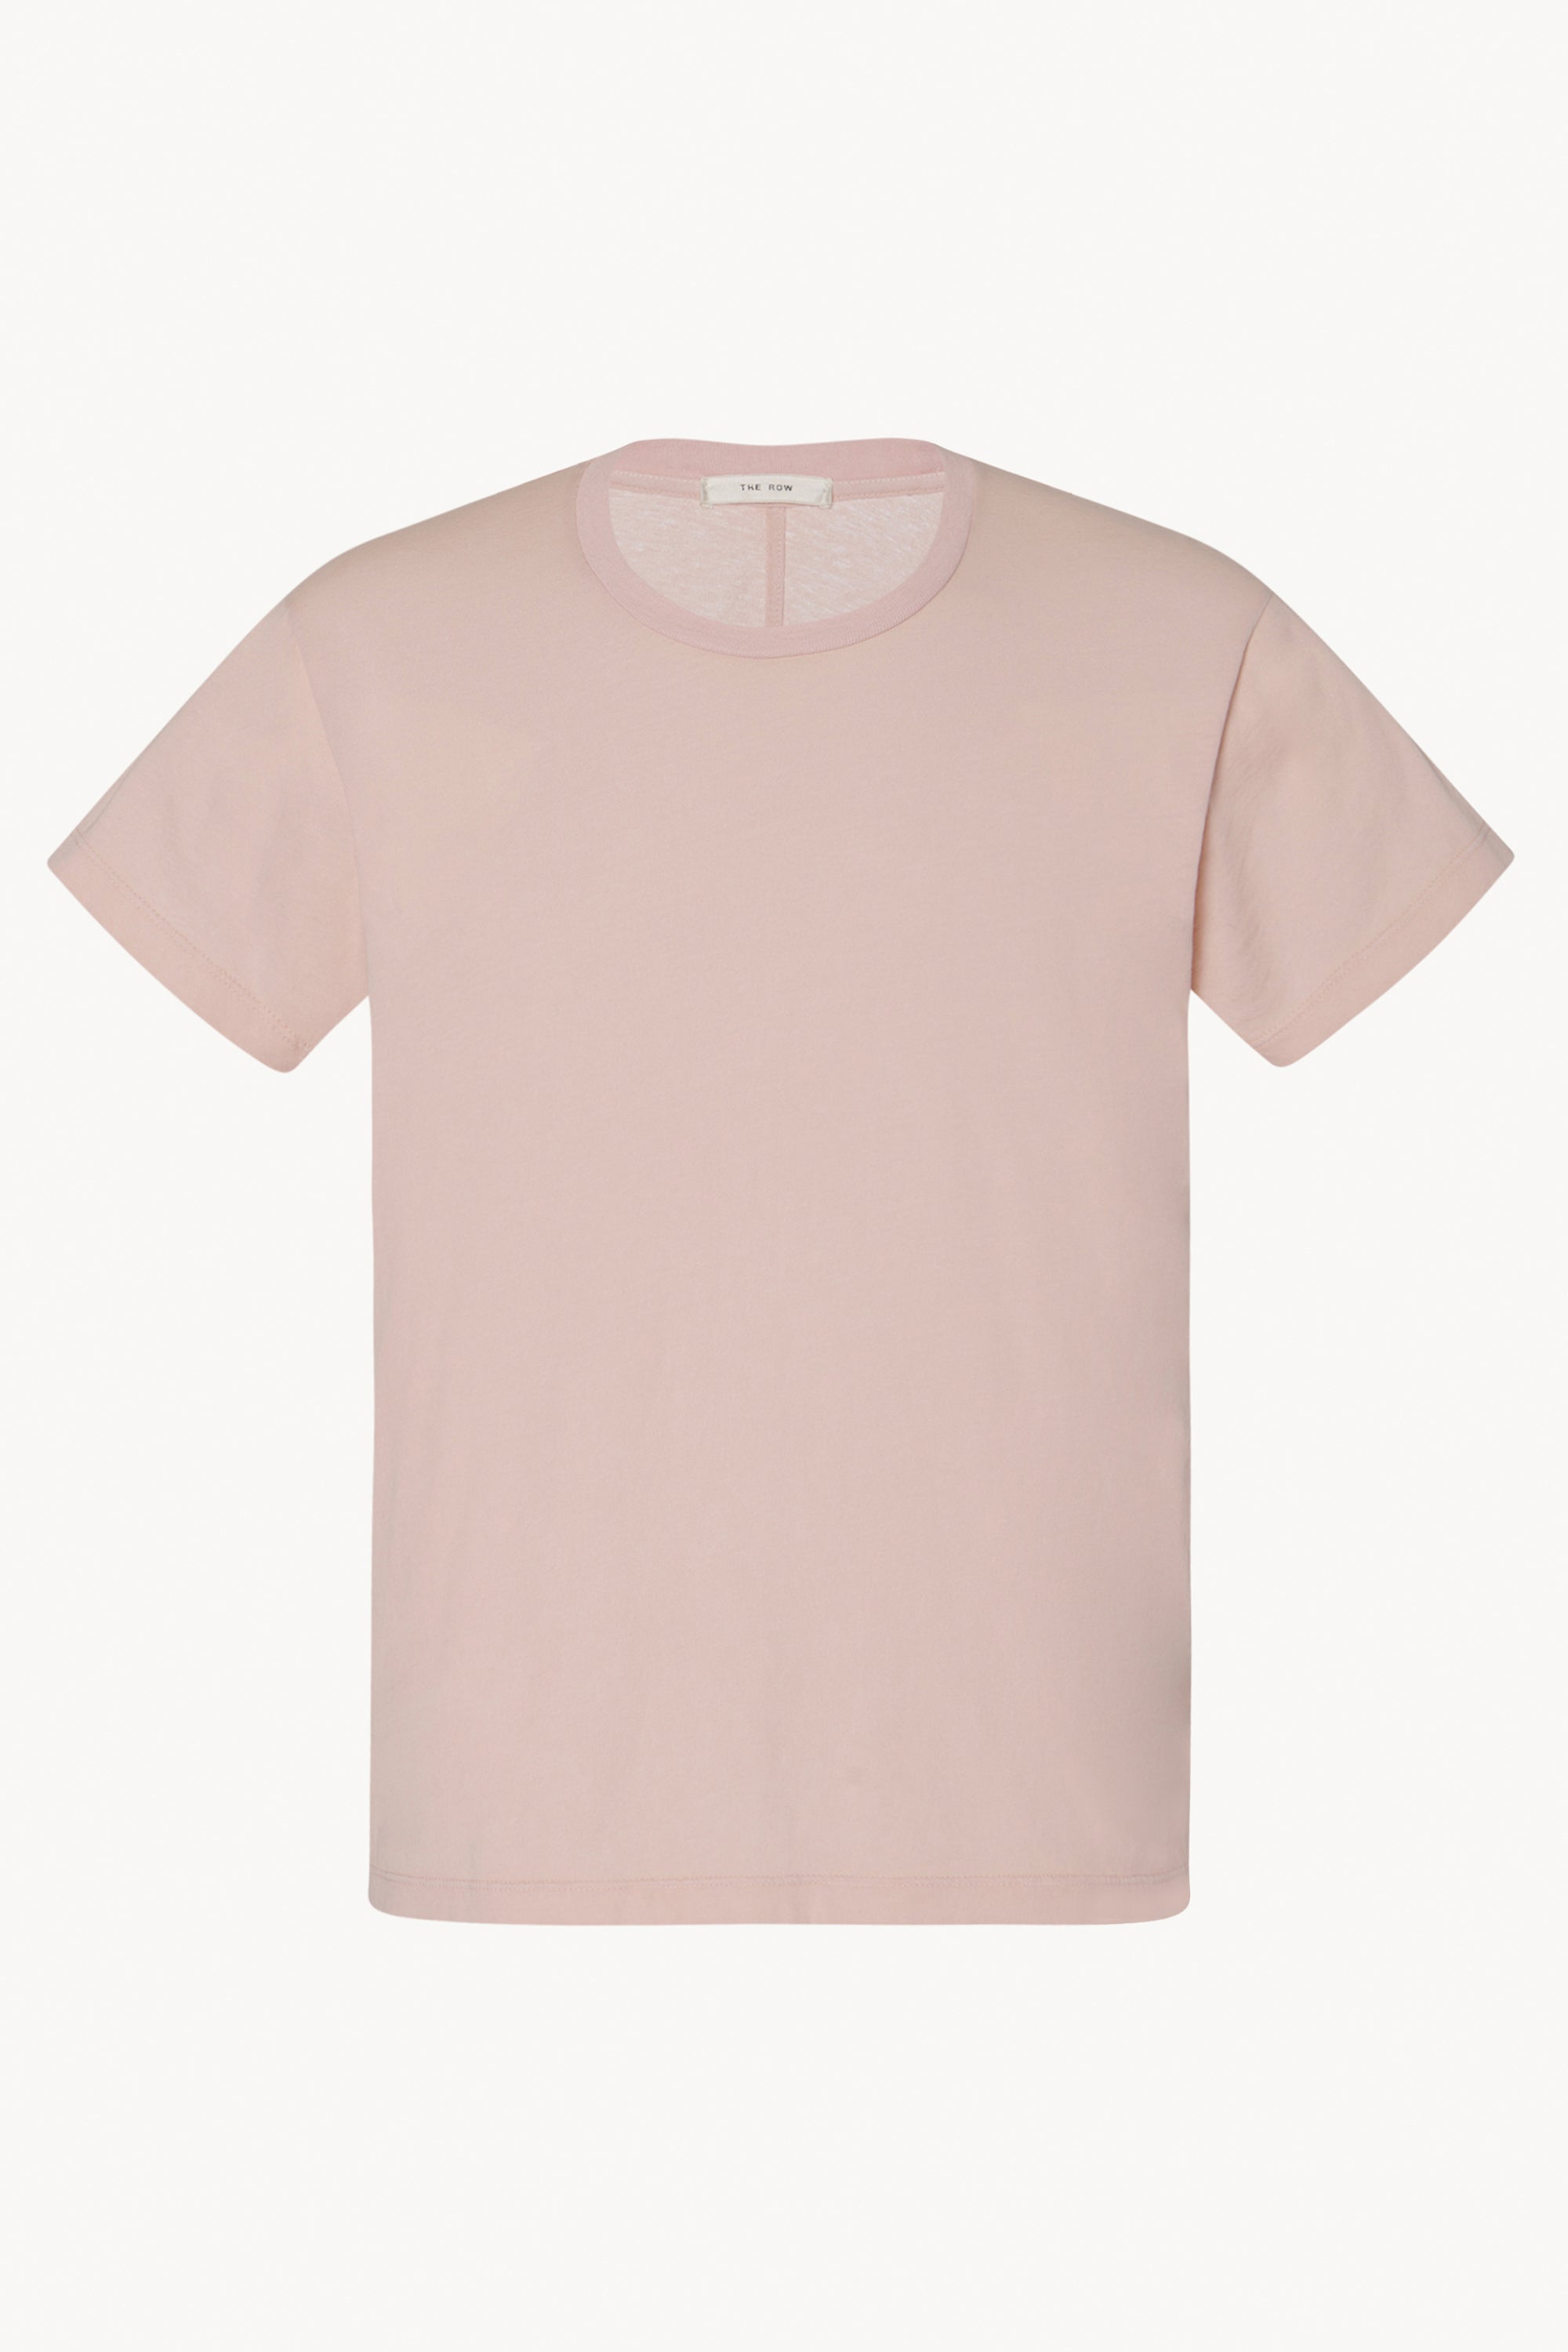 Men's T-shirts: Cotton & Cashmere Tees l The Row